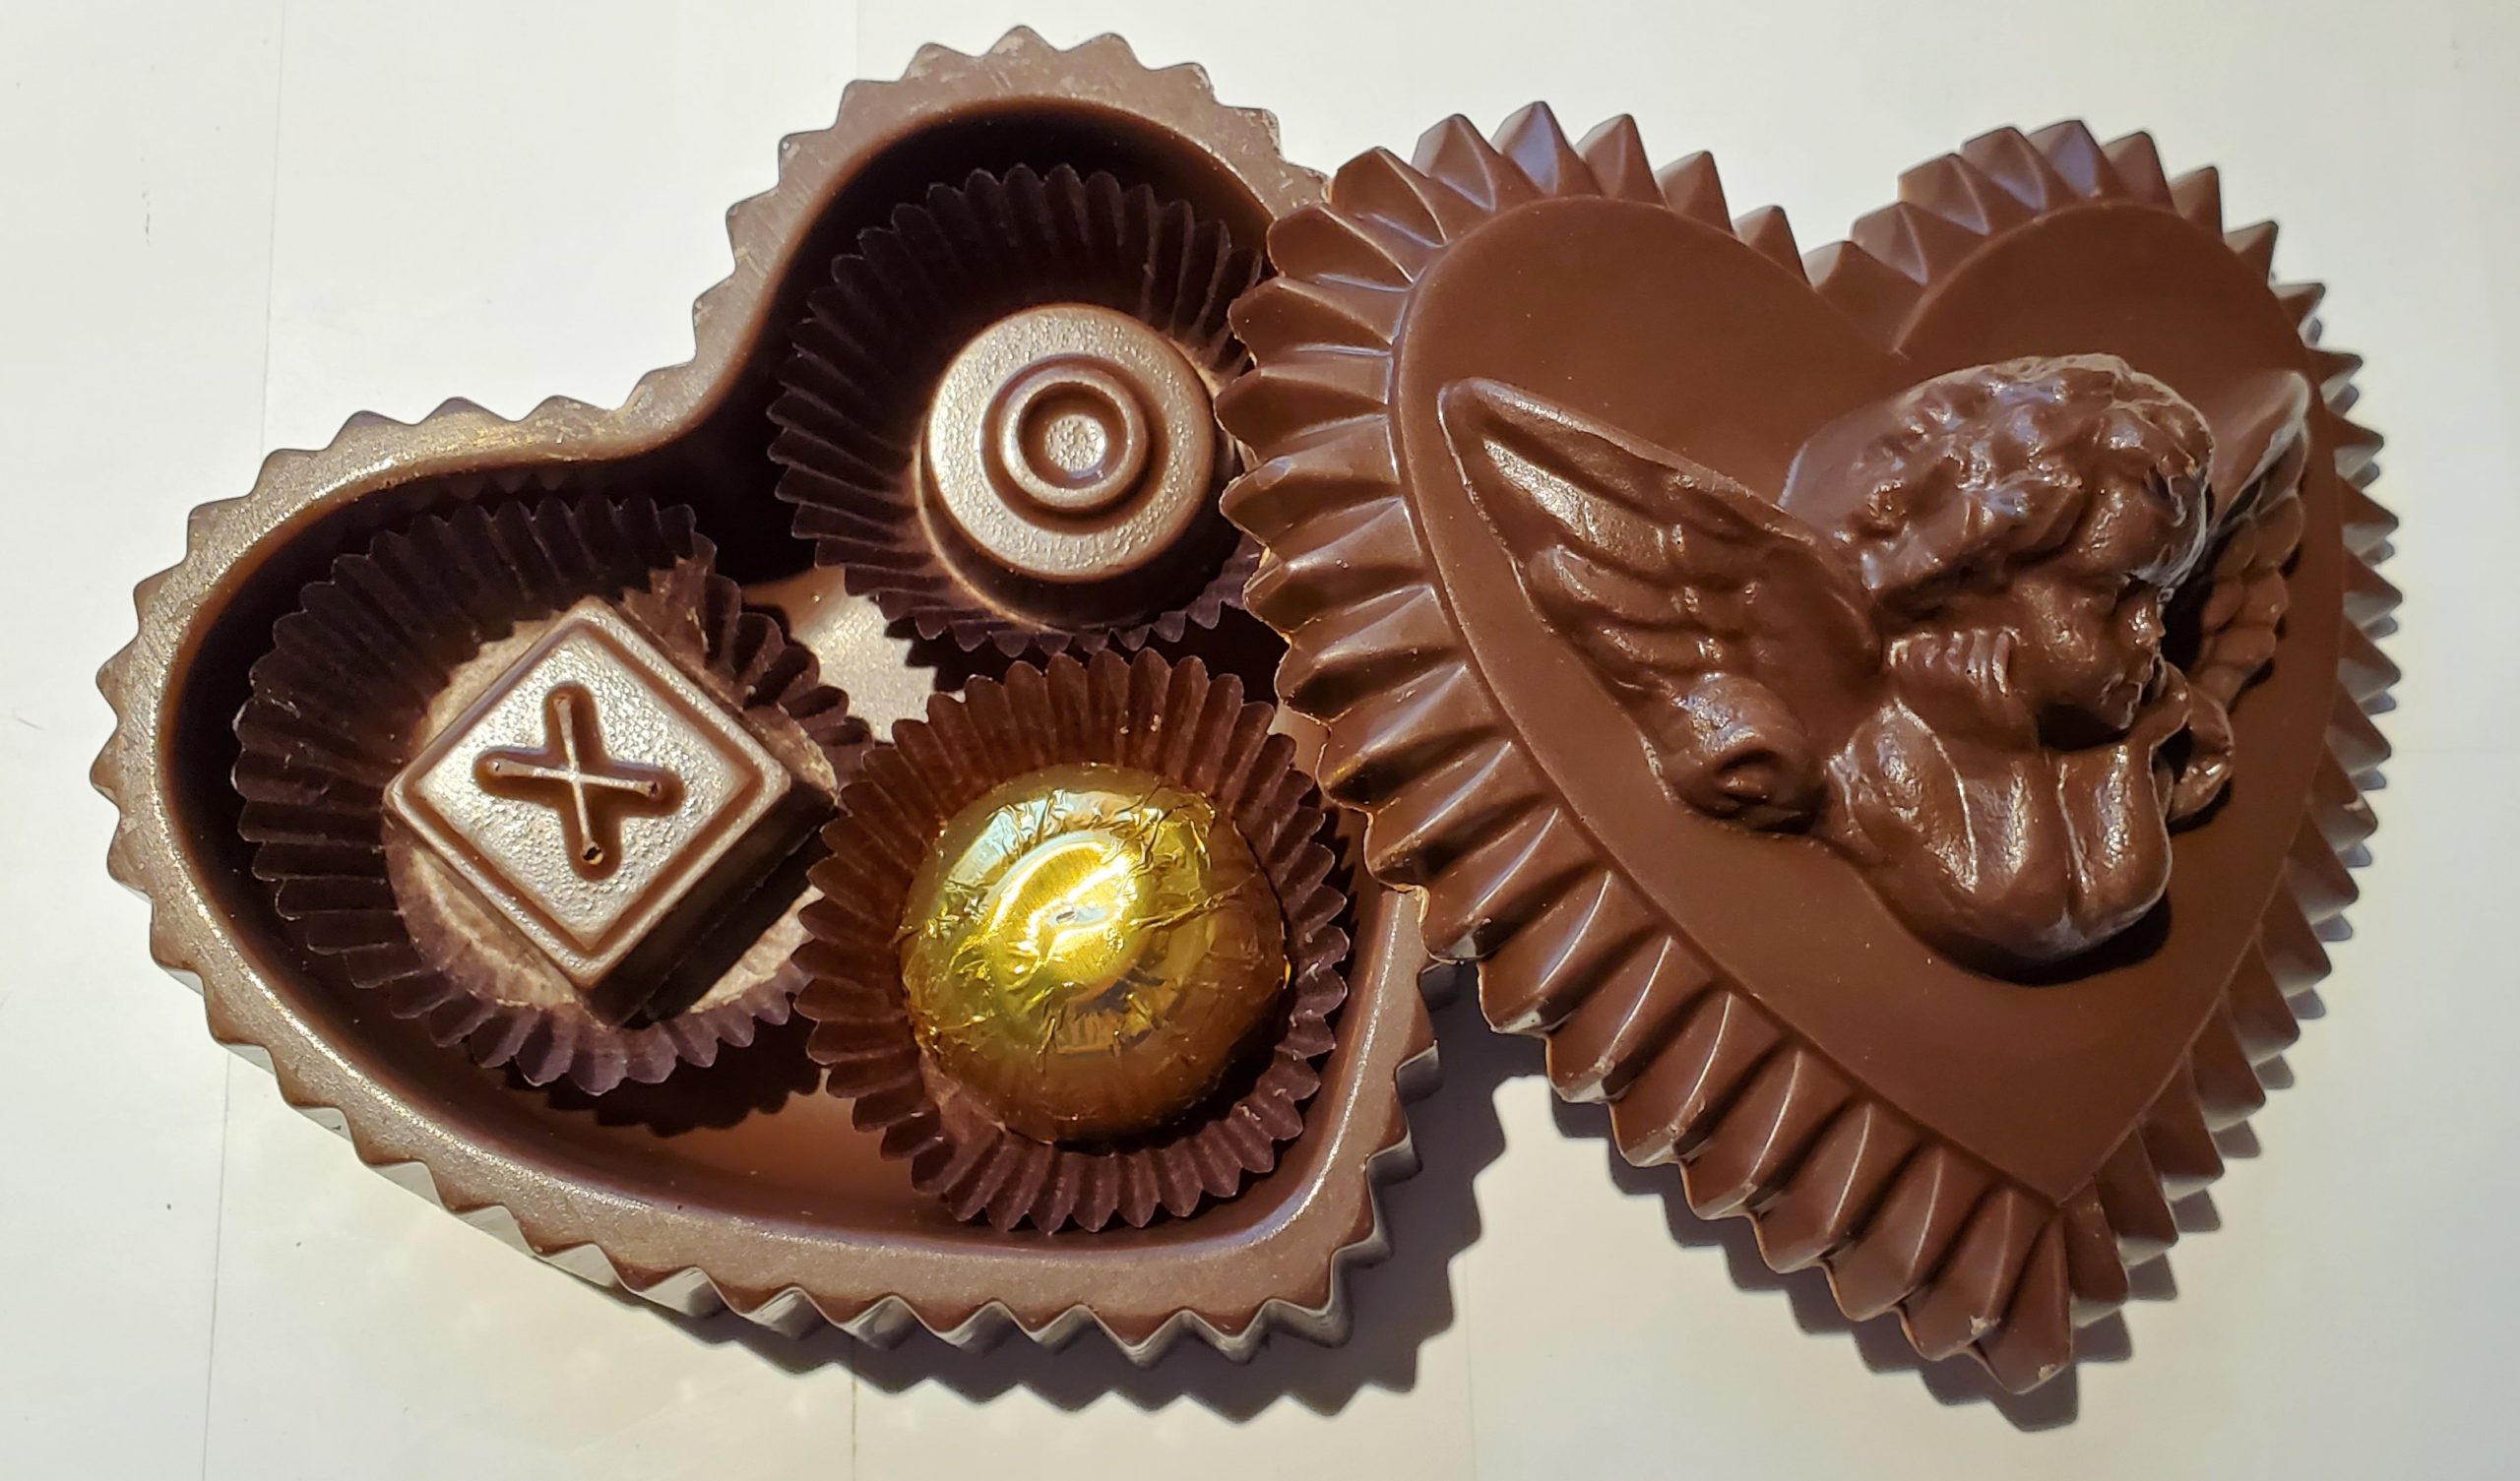 Origins of the heart-shaped chocolate box